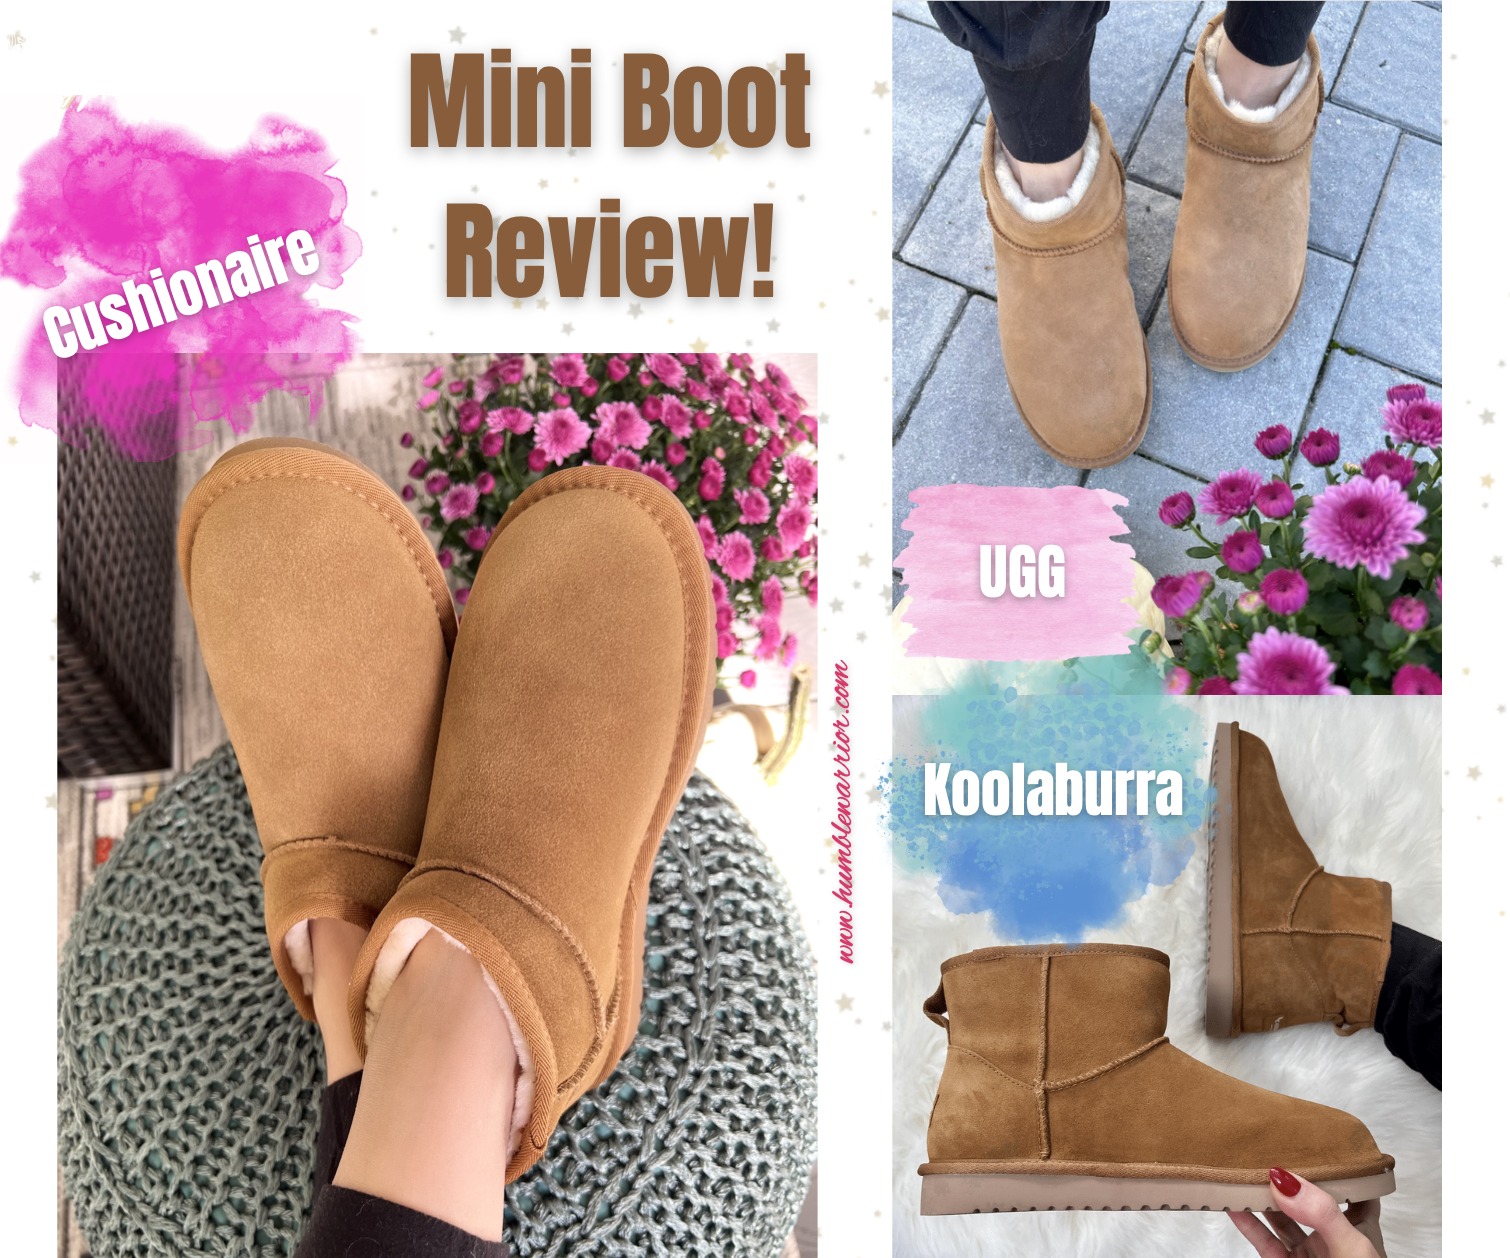 Mini Boot Review UGG Koolaburra Cushionaire 10 12 22